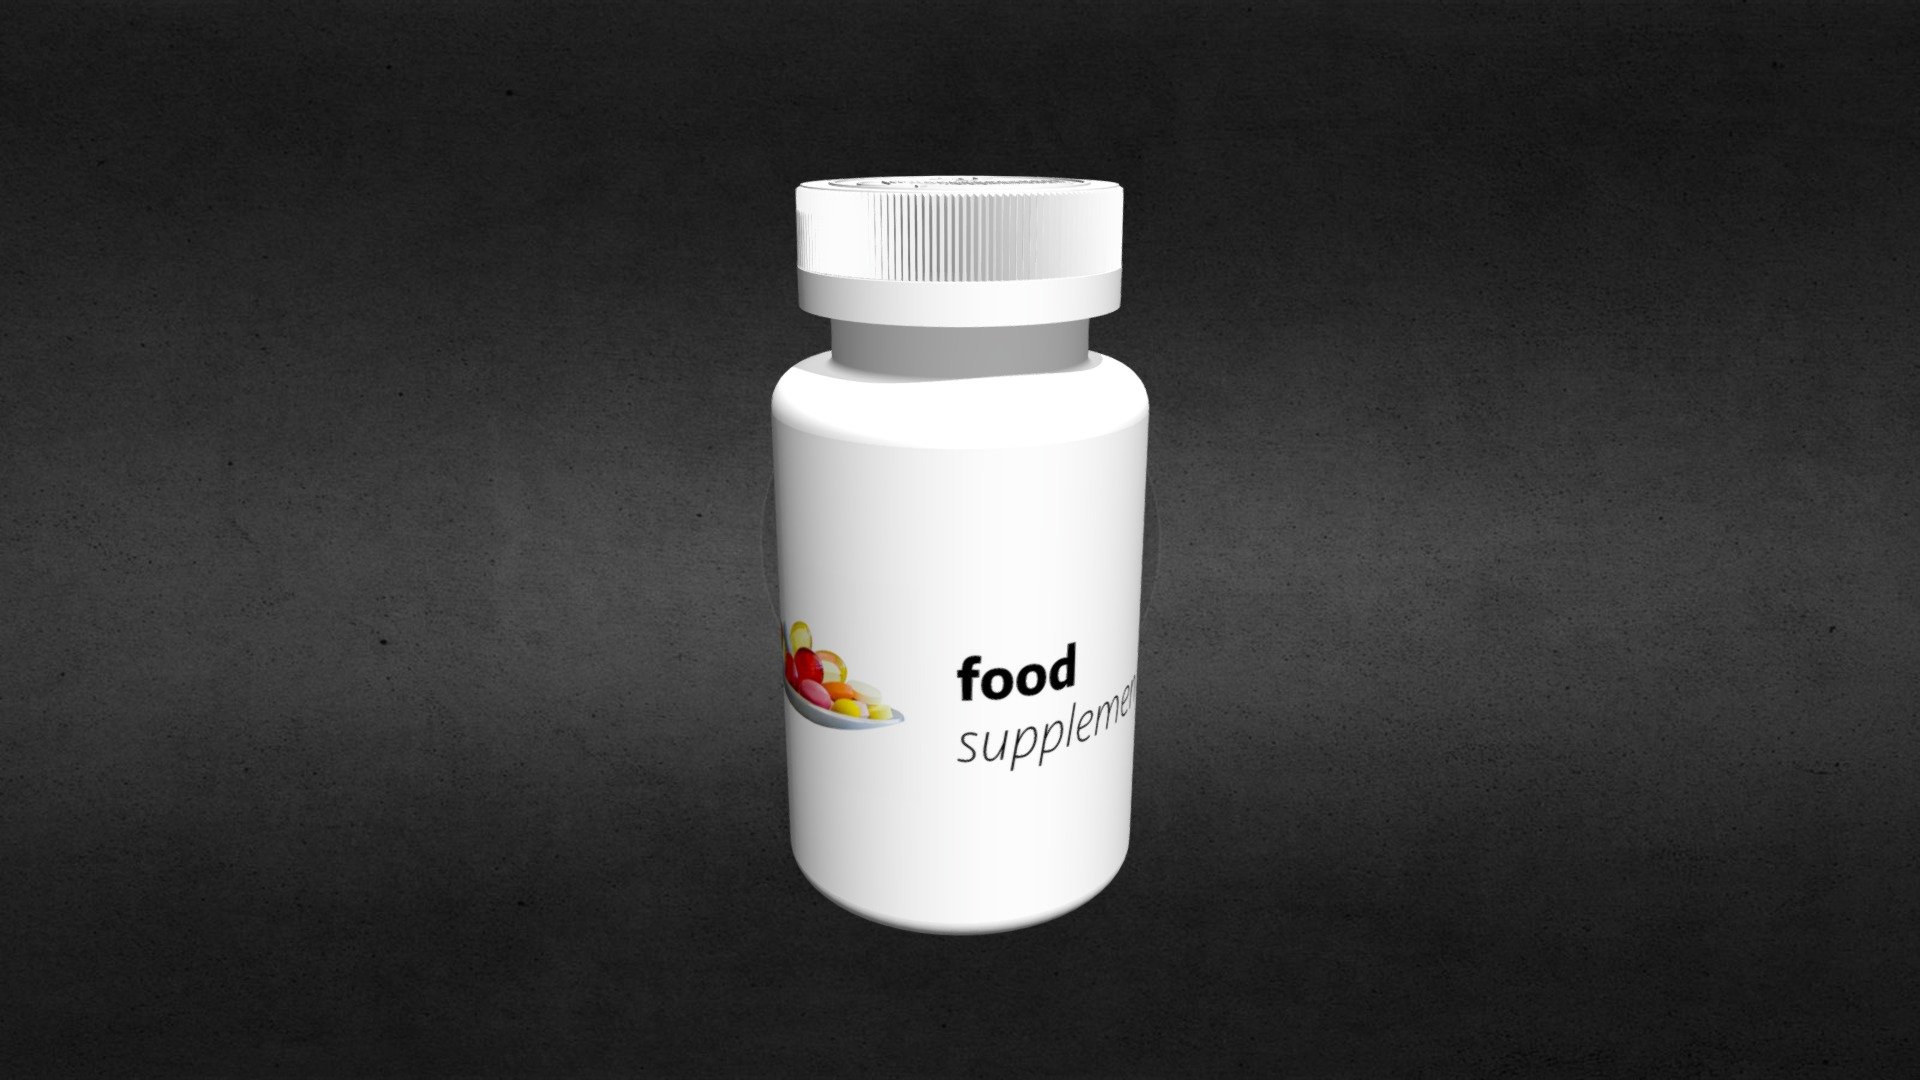 Food supplement